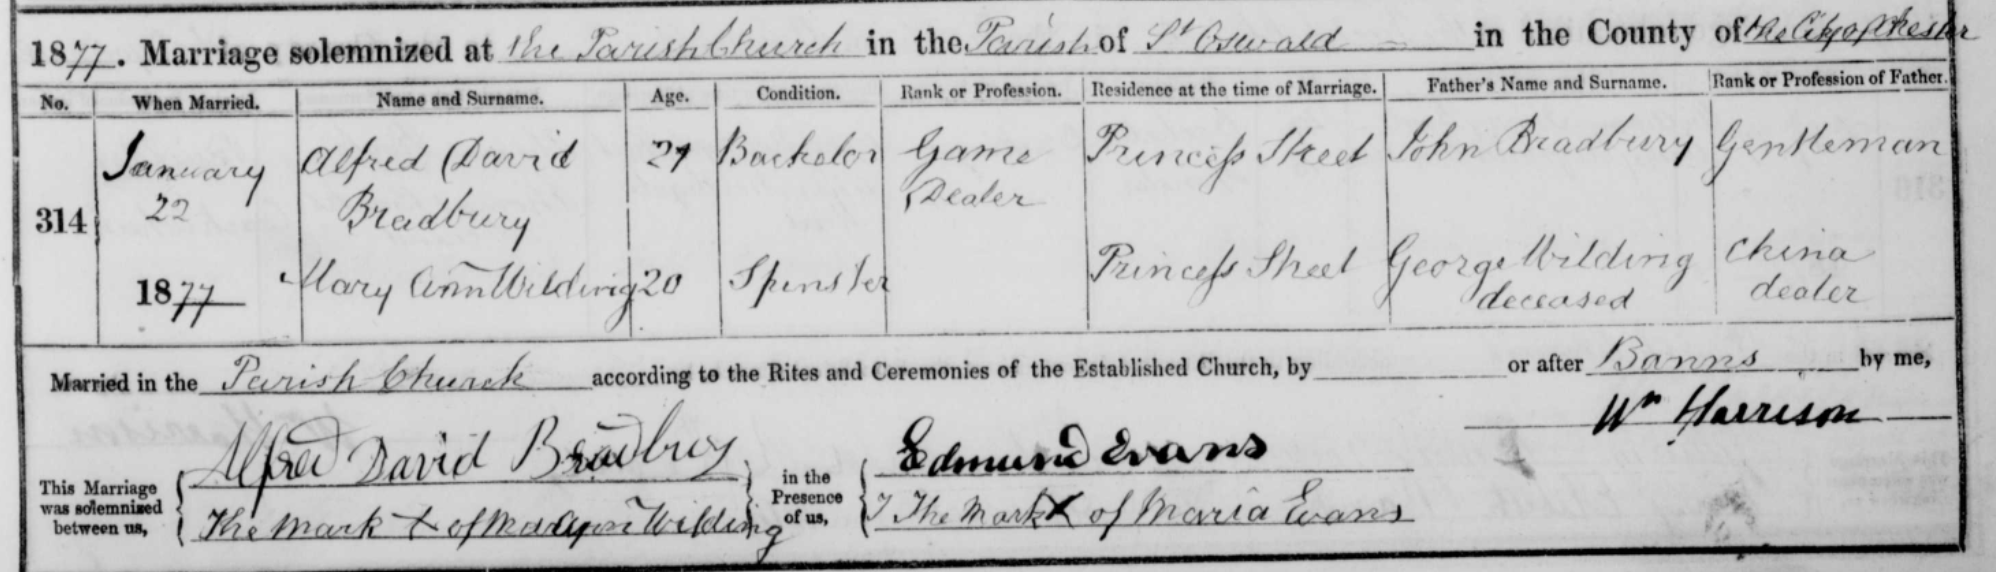 AlfredDBradbury marriage 1877